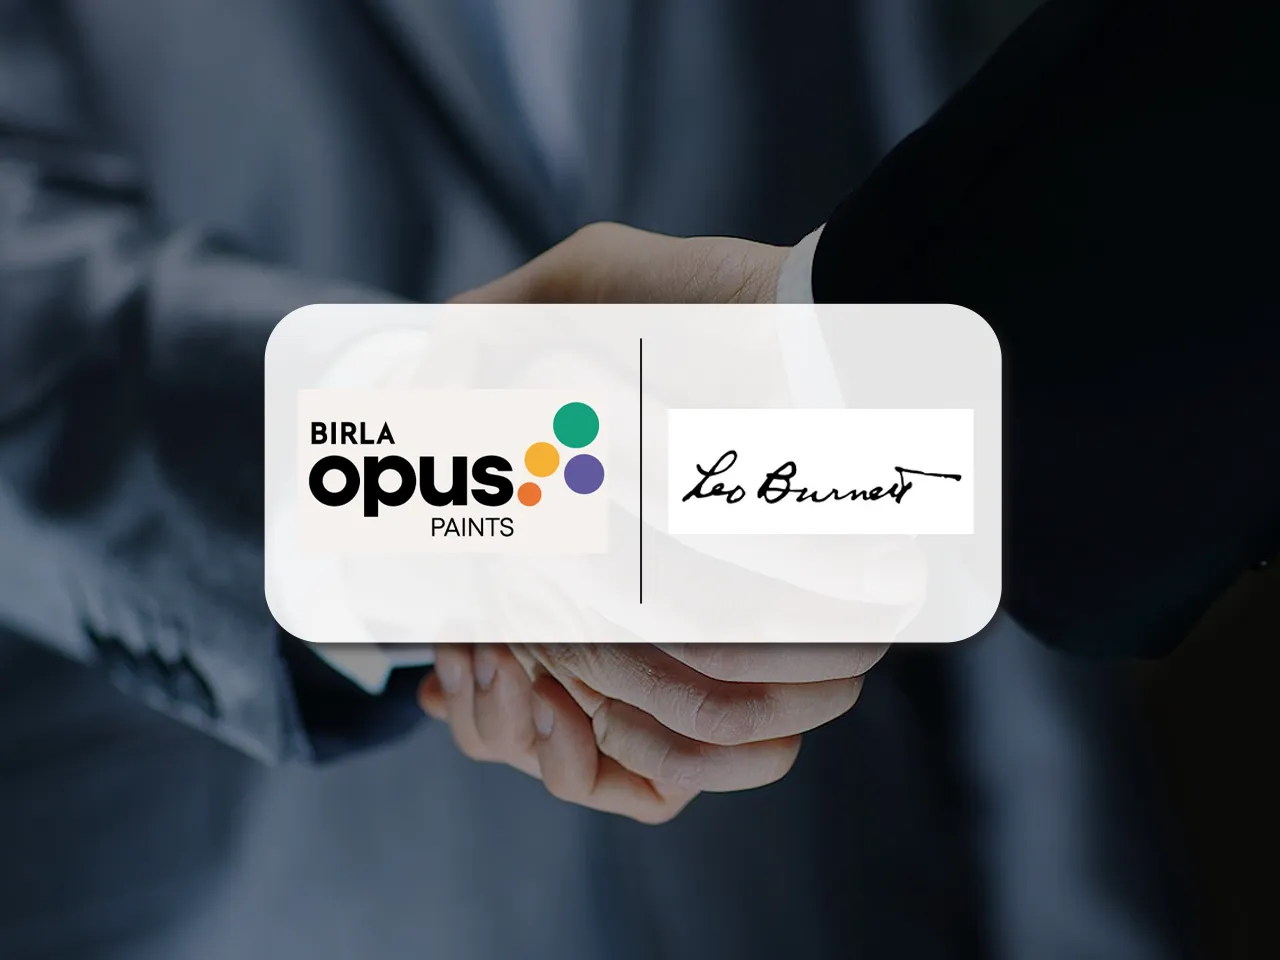 Leo Burnett India appointed as lead creative and strategic agency for Birla Opus